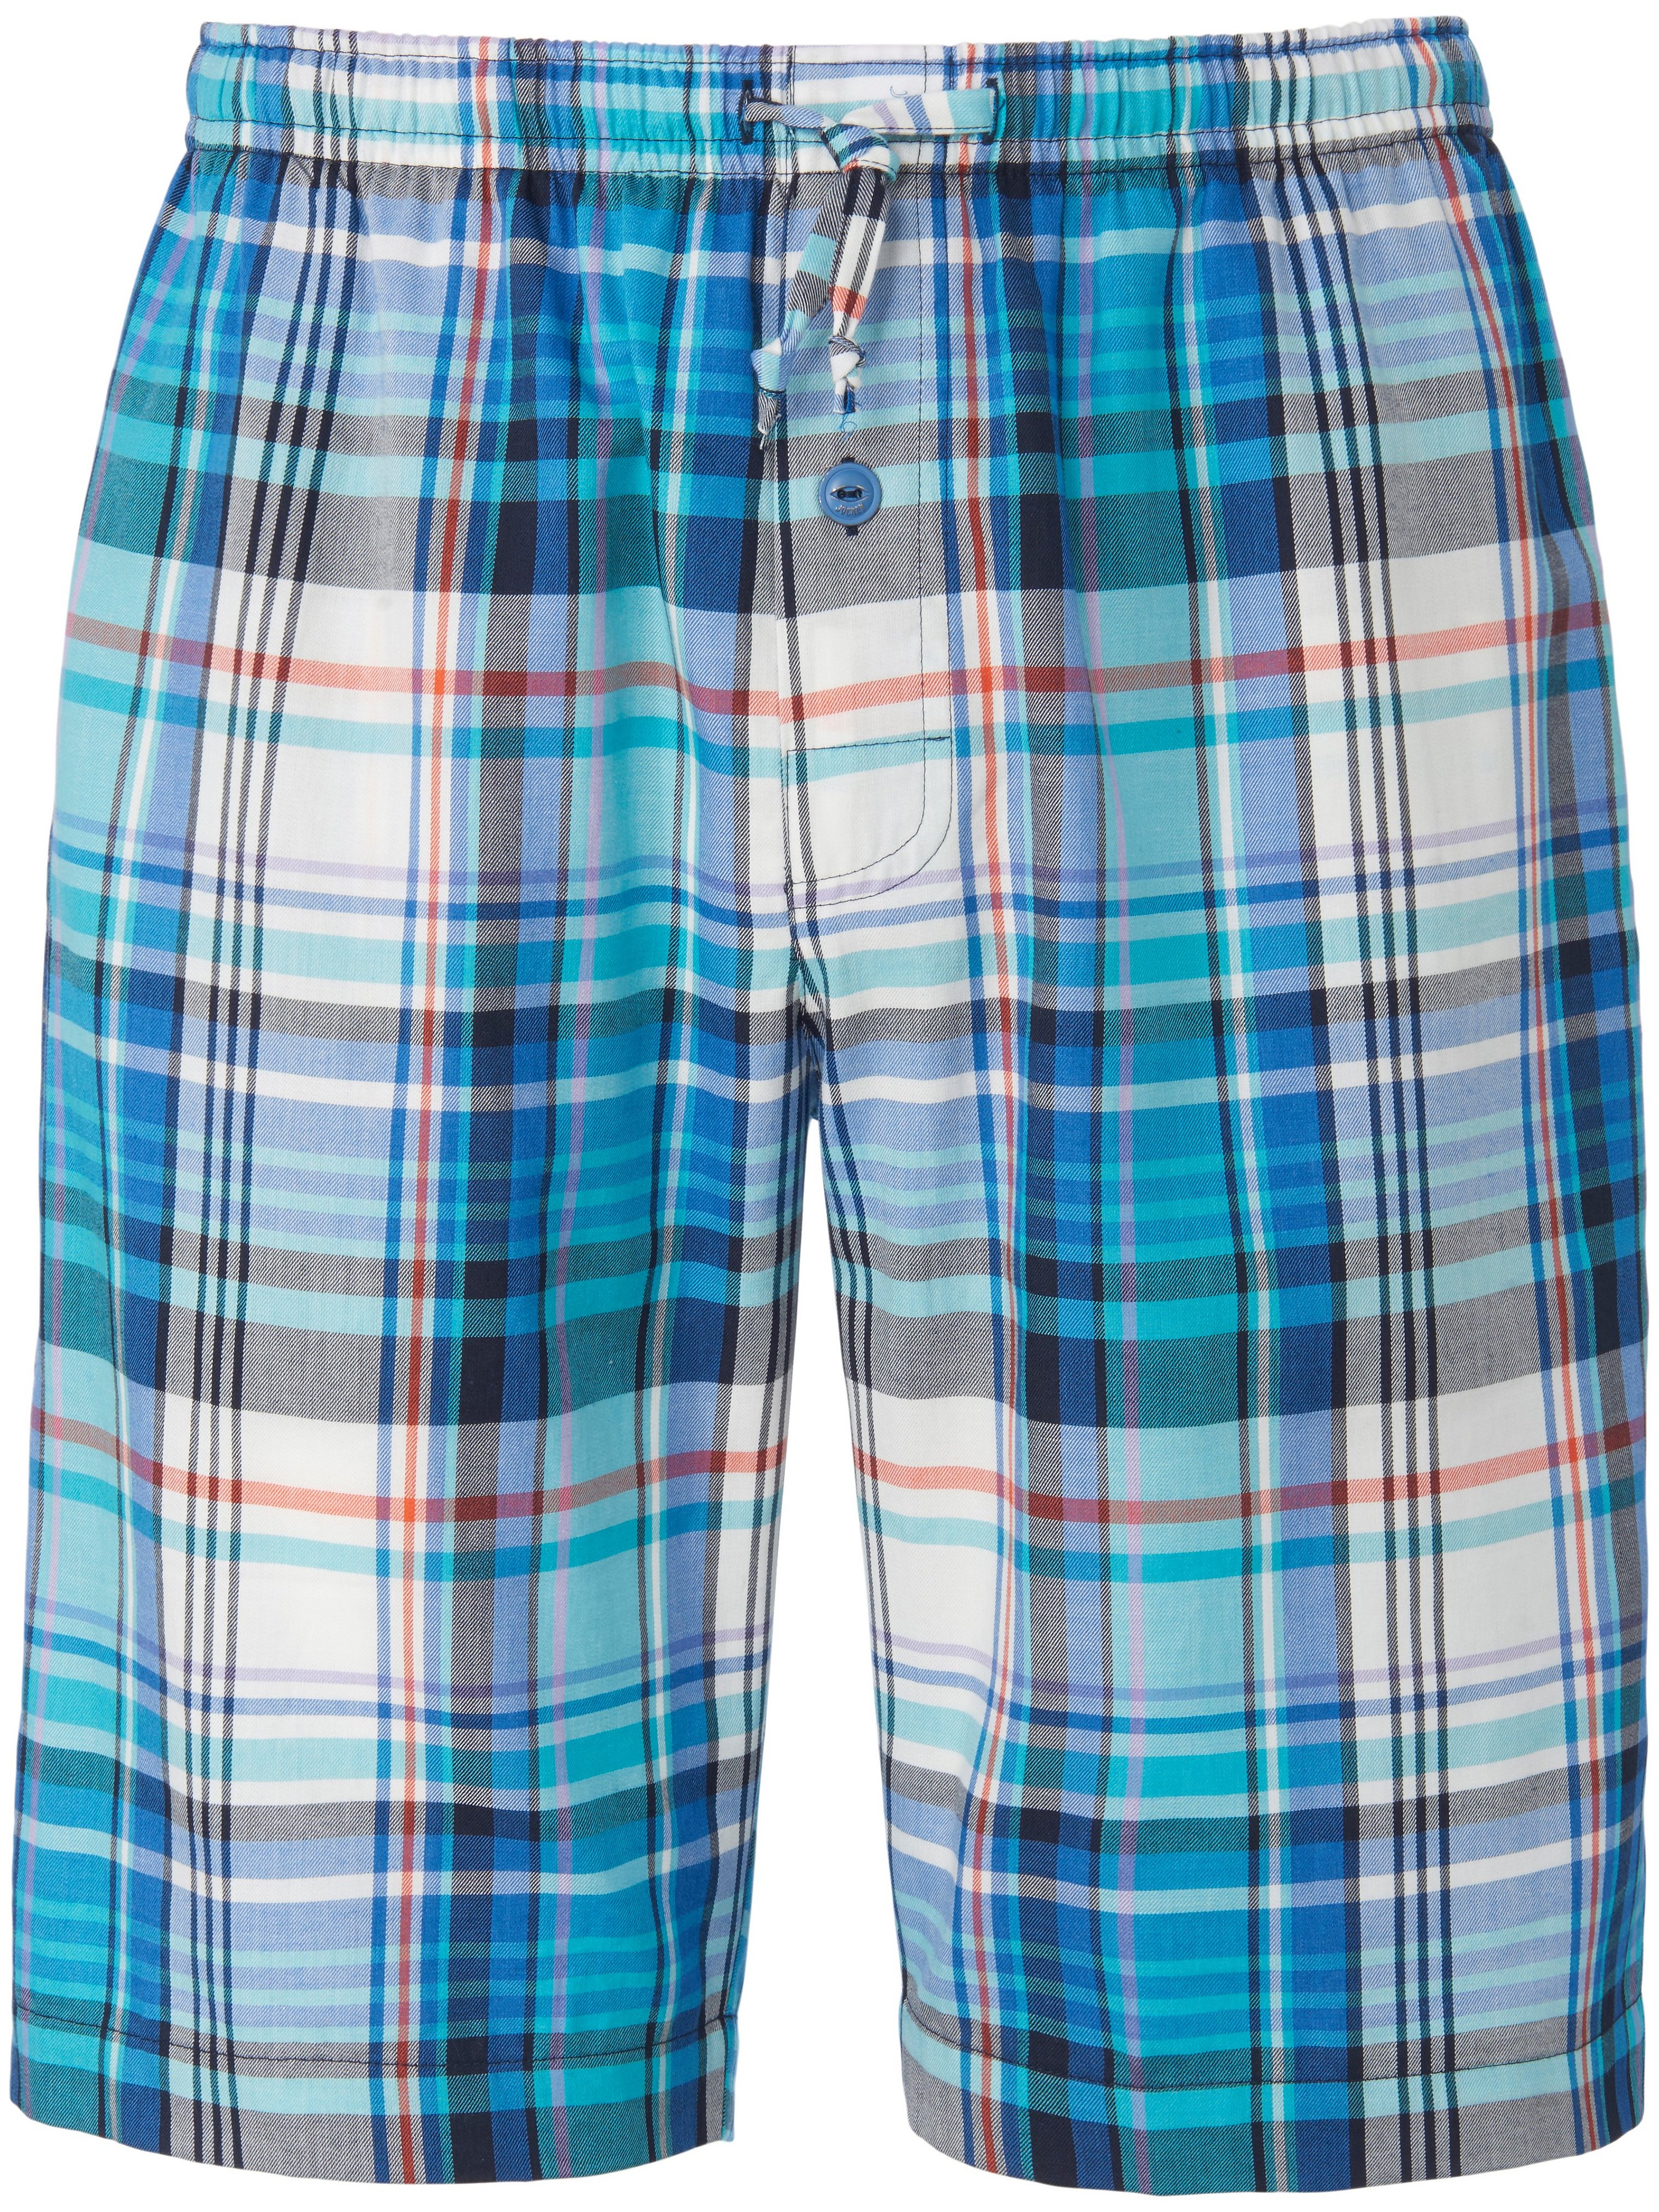 Le short pyjama avec motif carreaux  Jockey turquoise